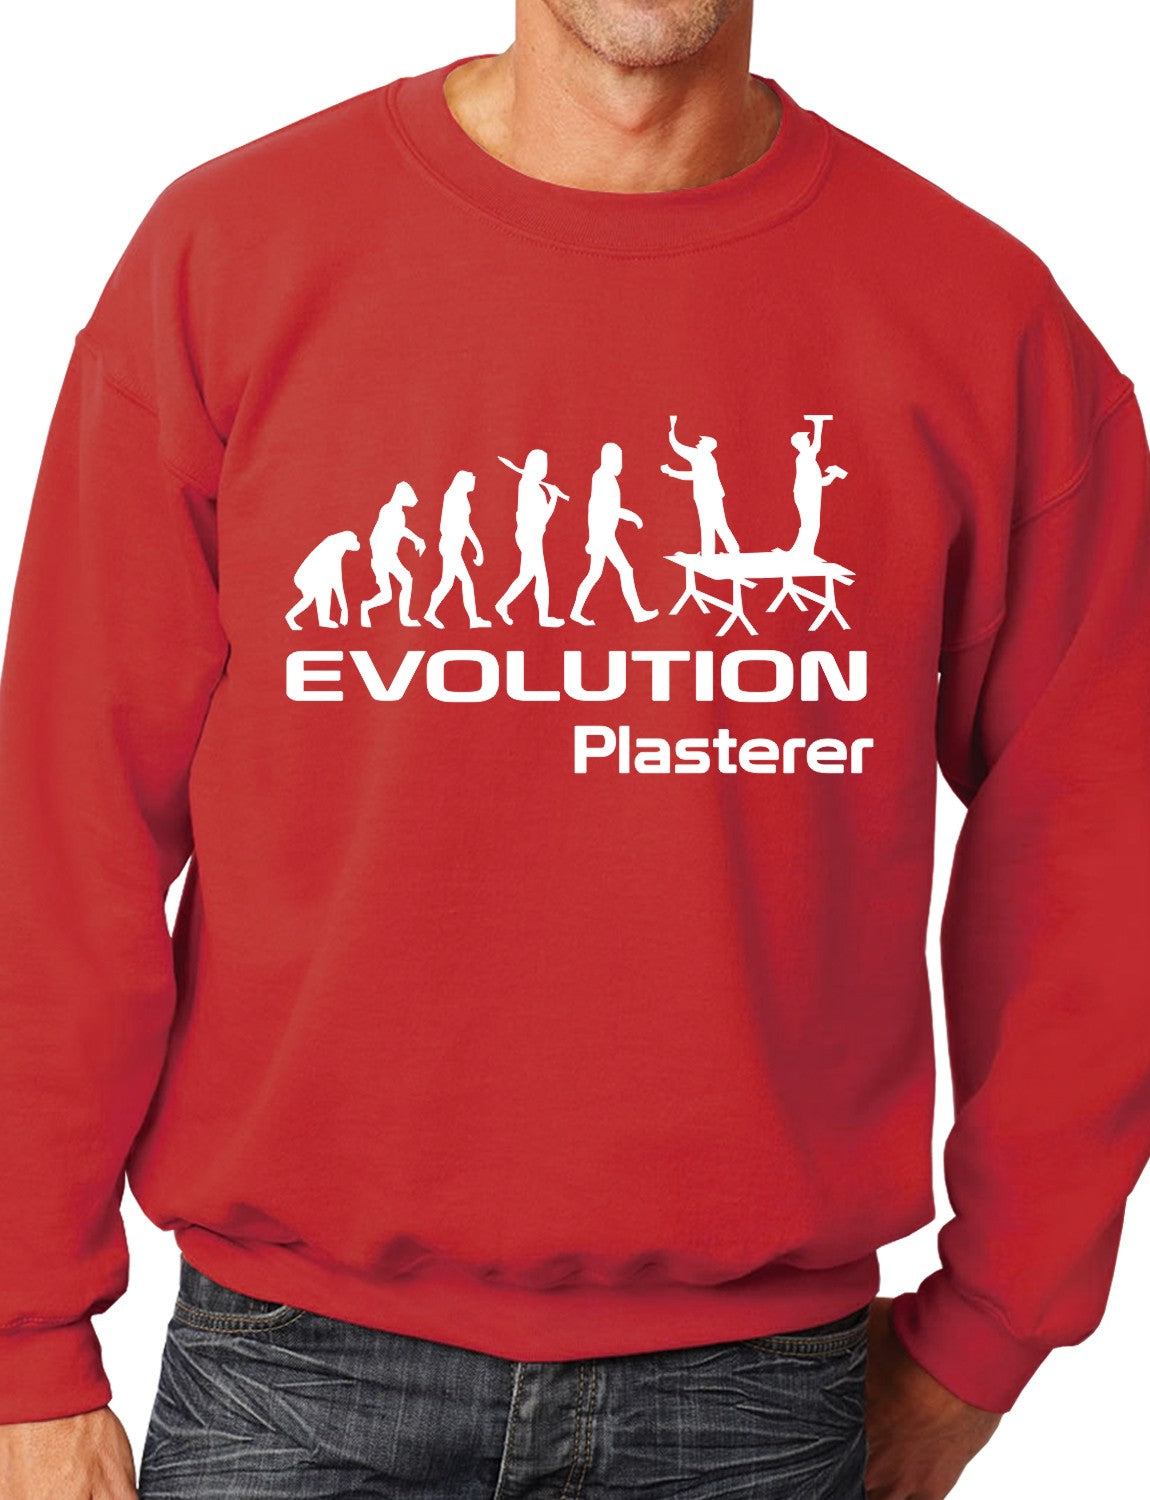 Evolution Of Window Cleaner Funny Adult Sweatshirt